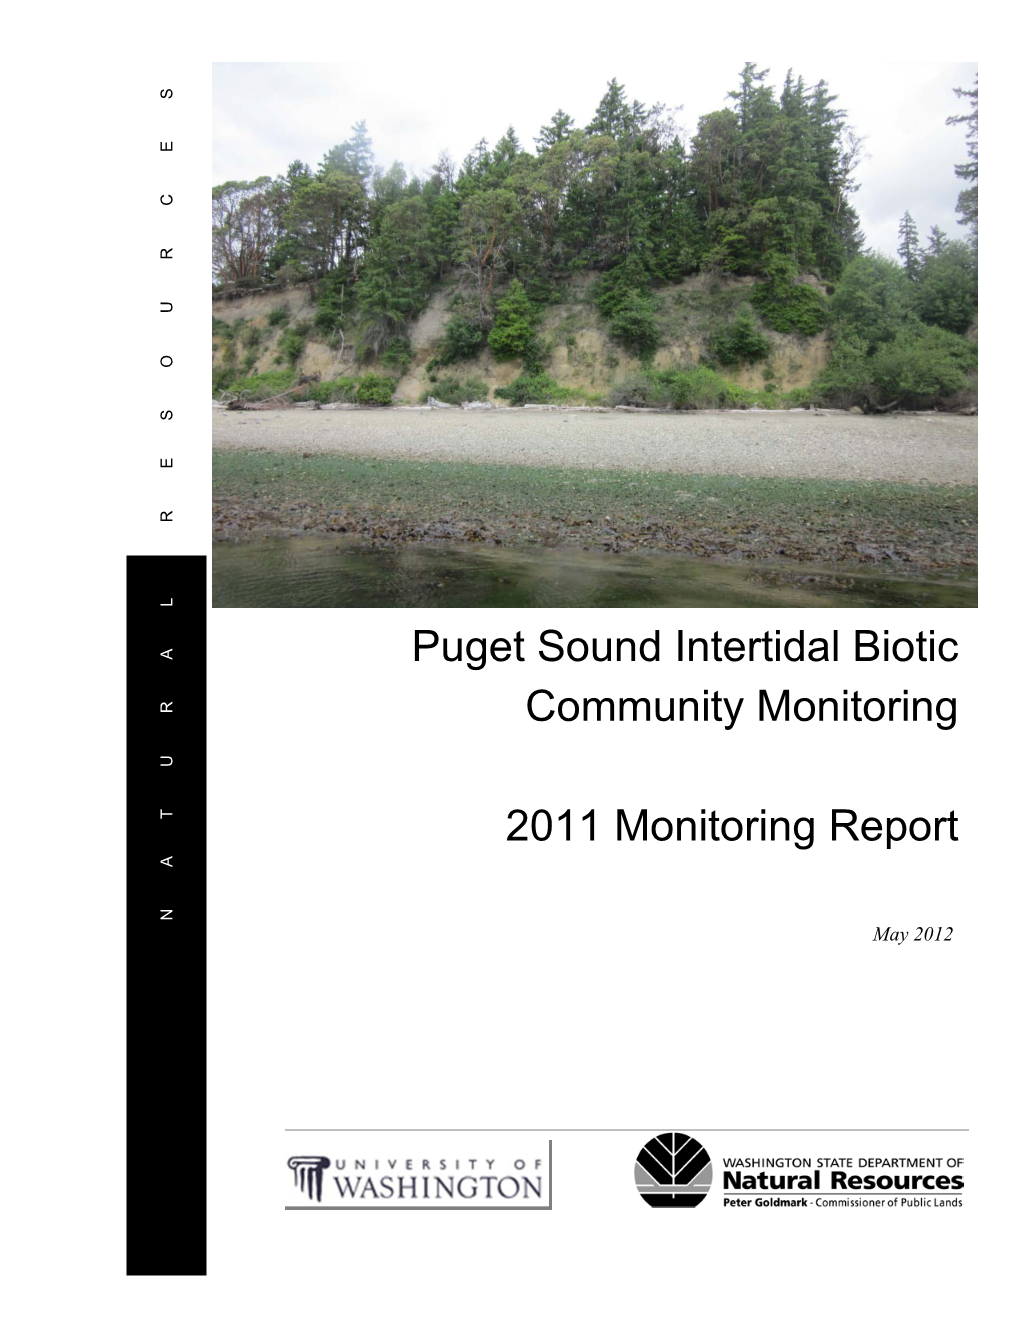 Puget Sound Intertidal Biotic Community Monitoring 2011